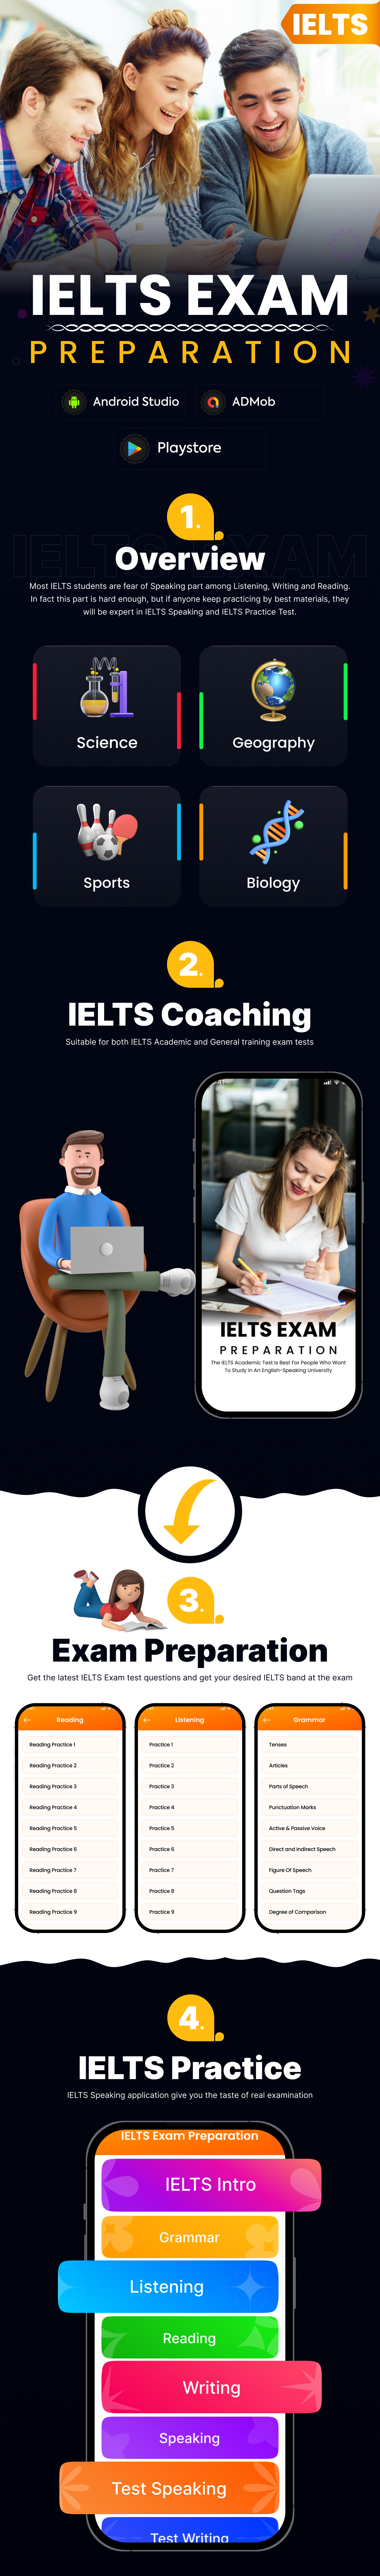 IELTS Exam Full Preparation - IELTS Practice Band - IELTS Vocabulary - IELTS Complete Preparation - 1